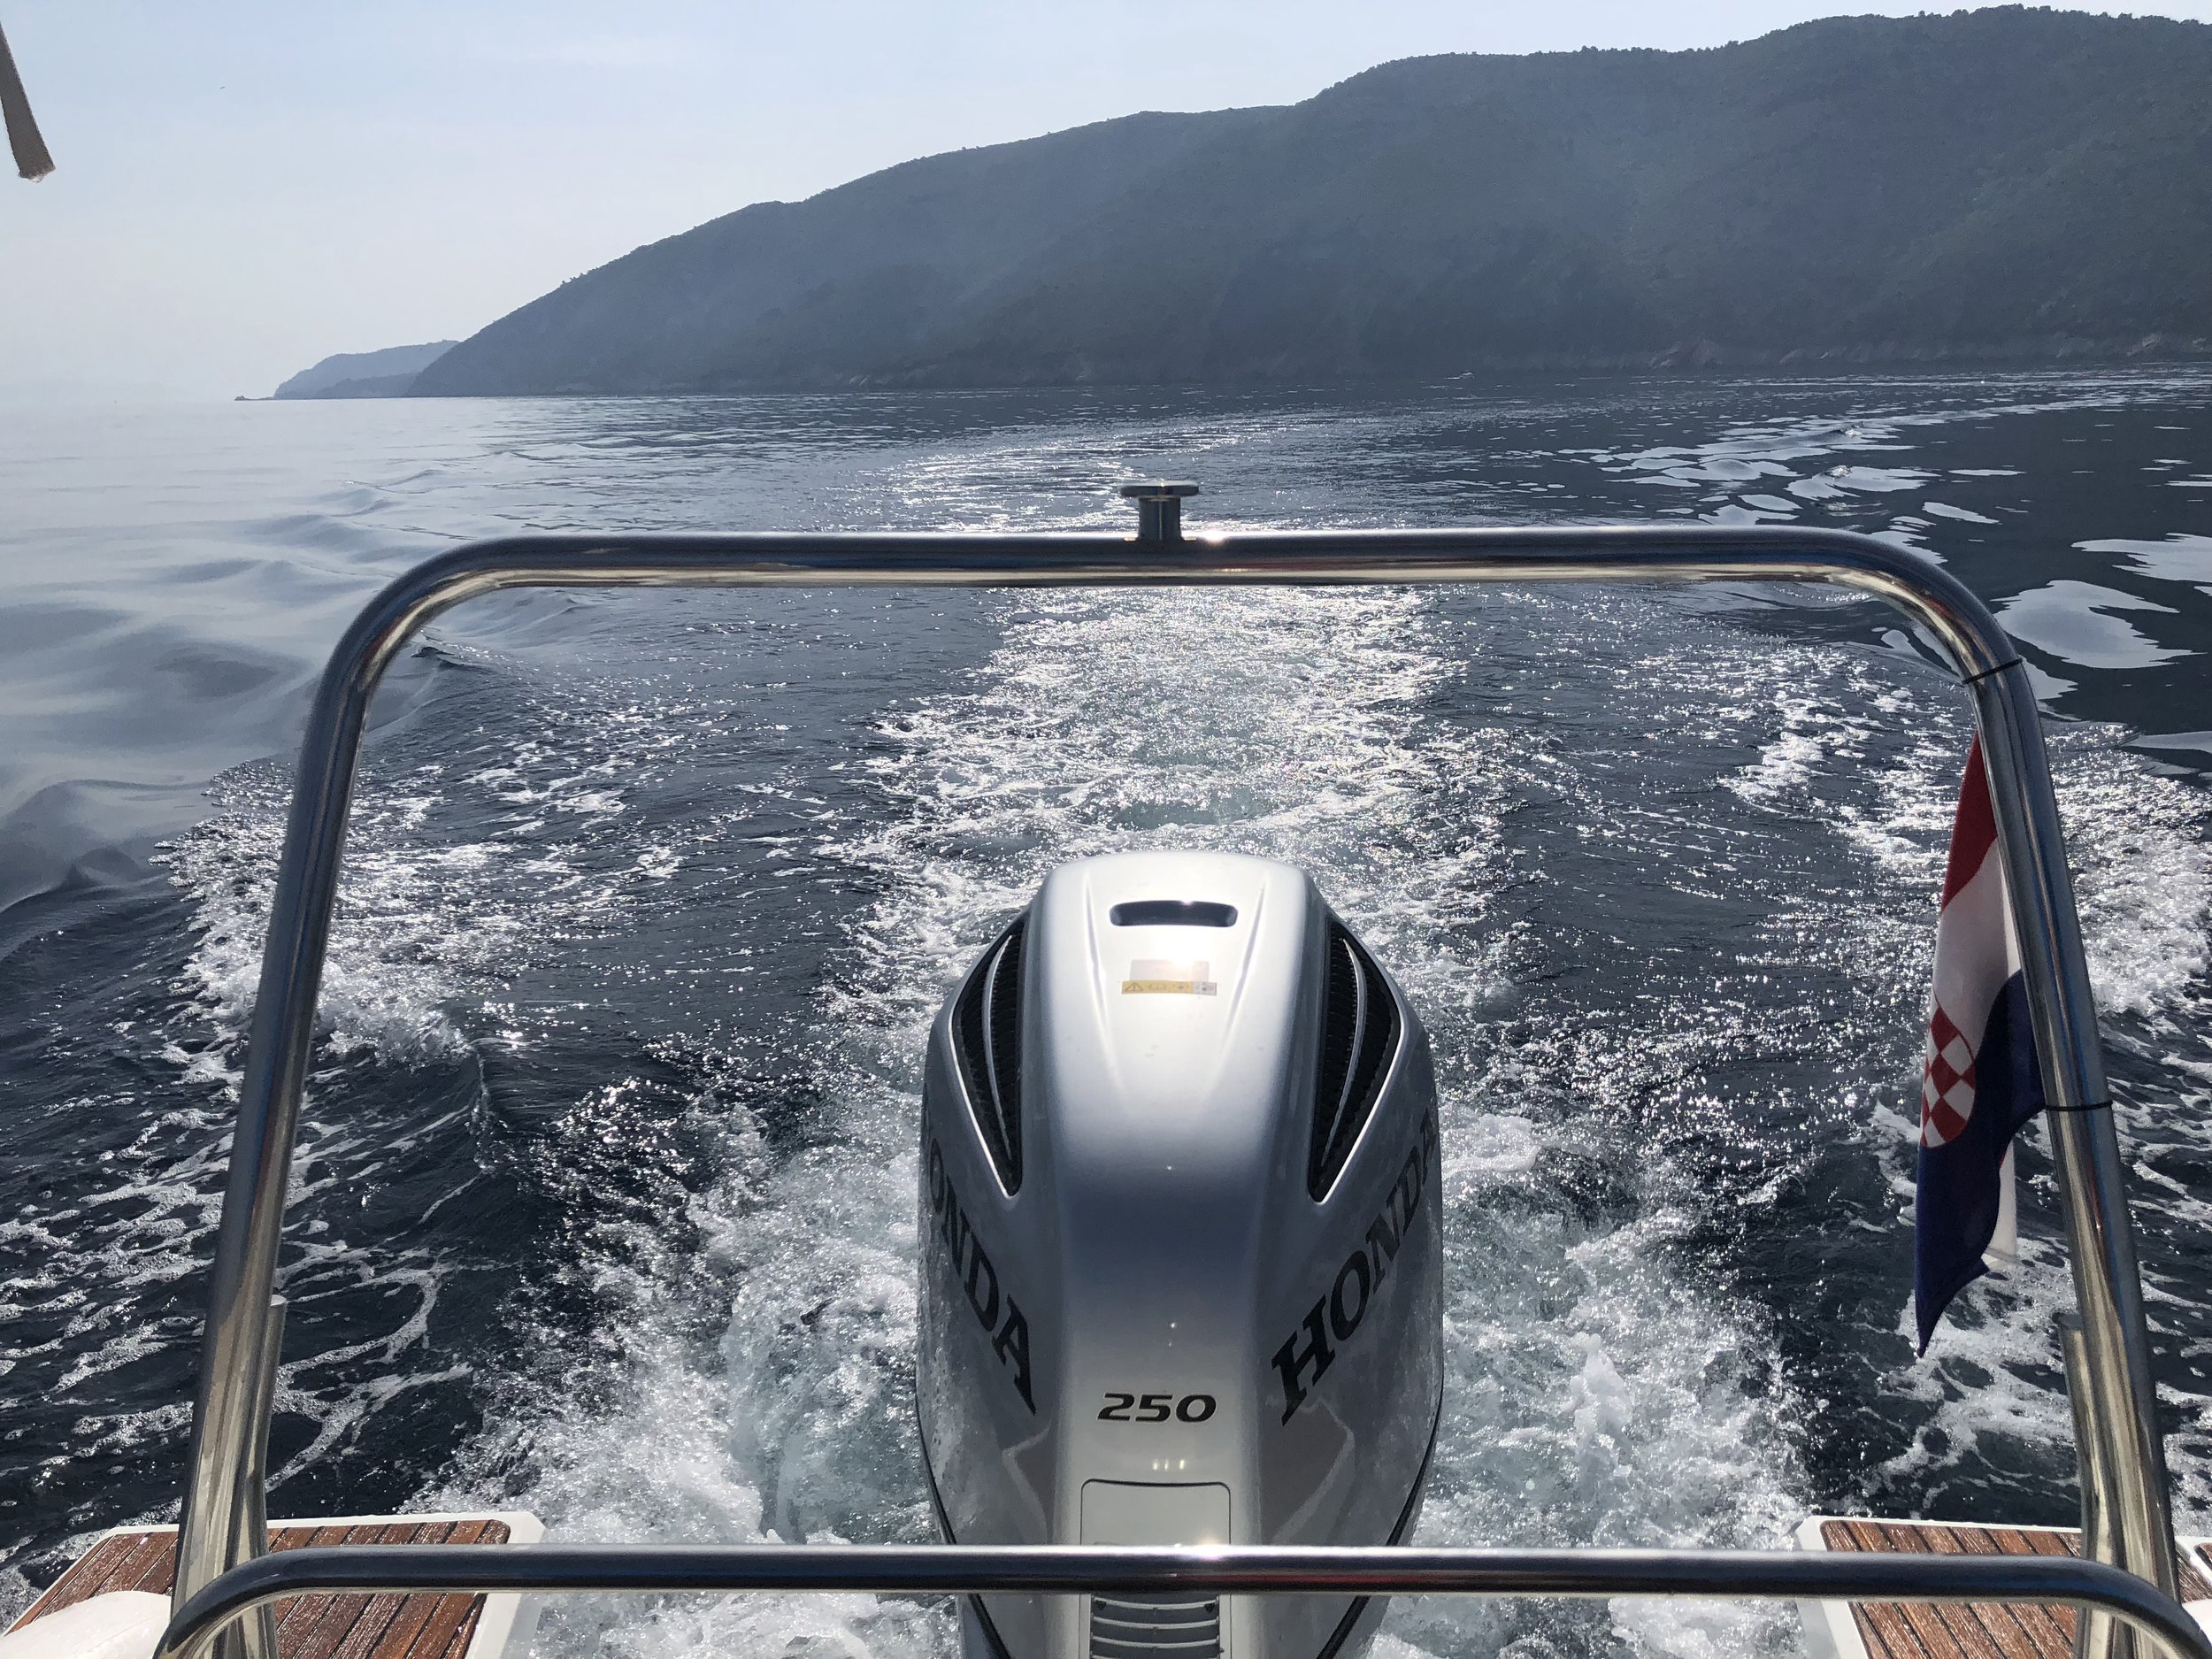 boat motor and scenery of the Adriatic Sea off the coast of Split Croatia